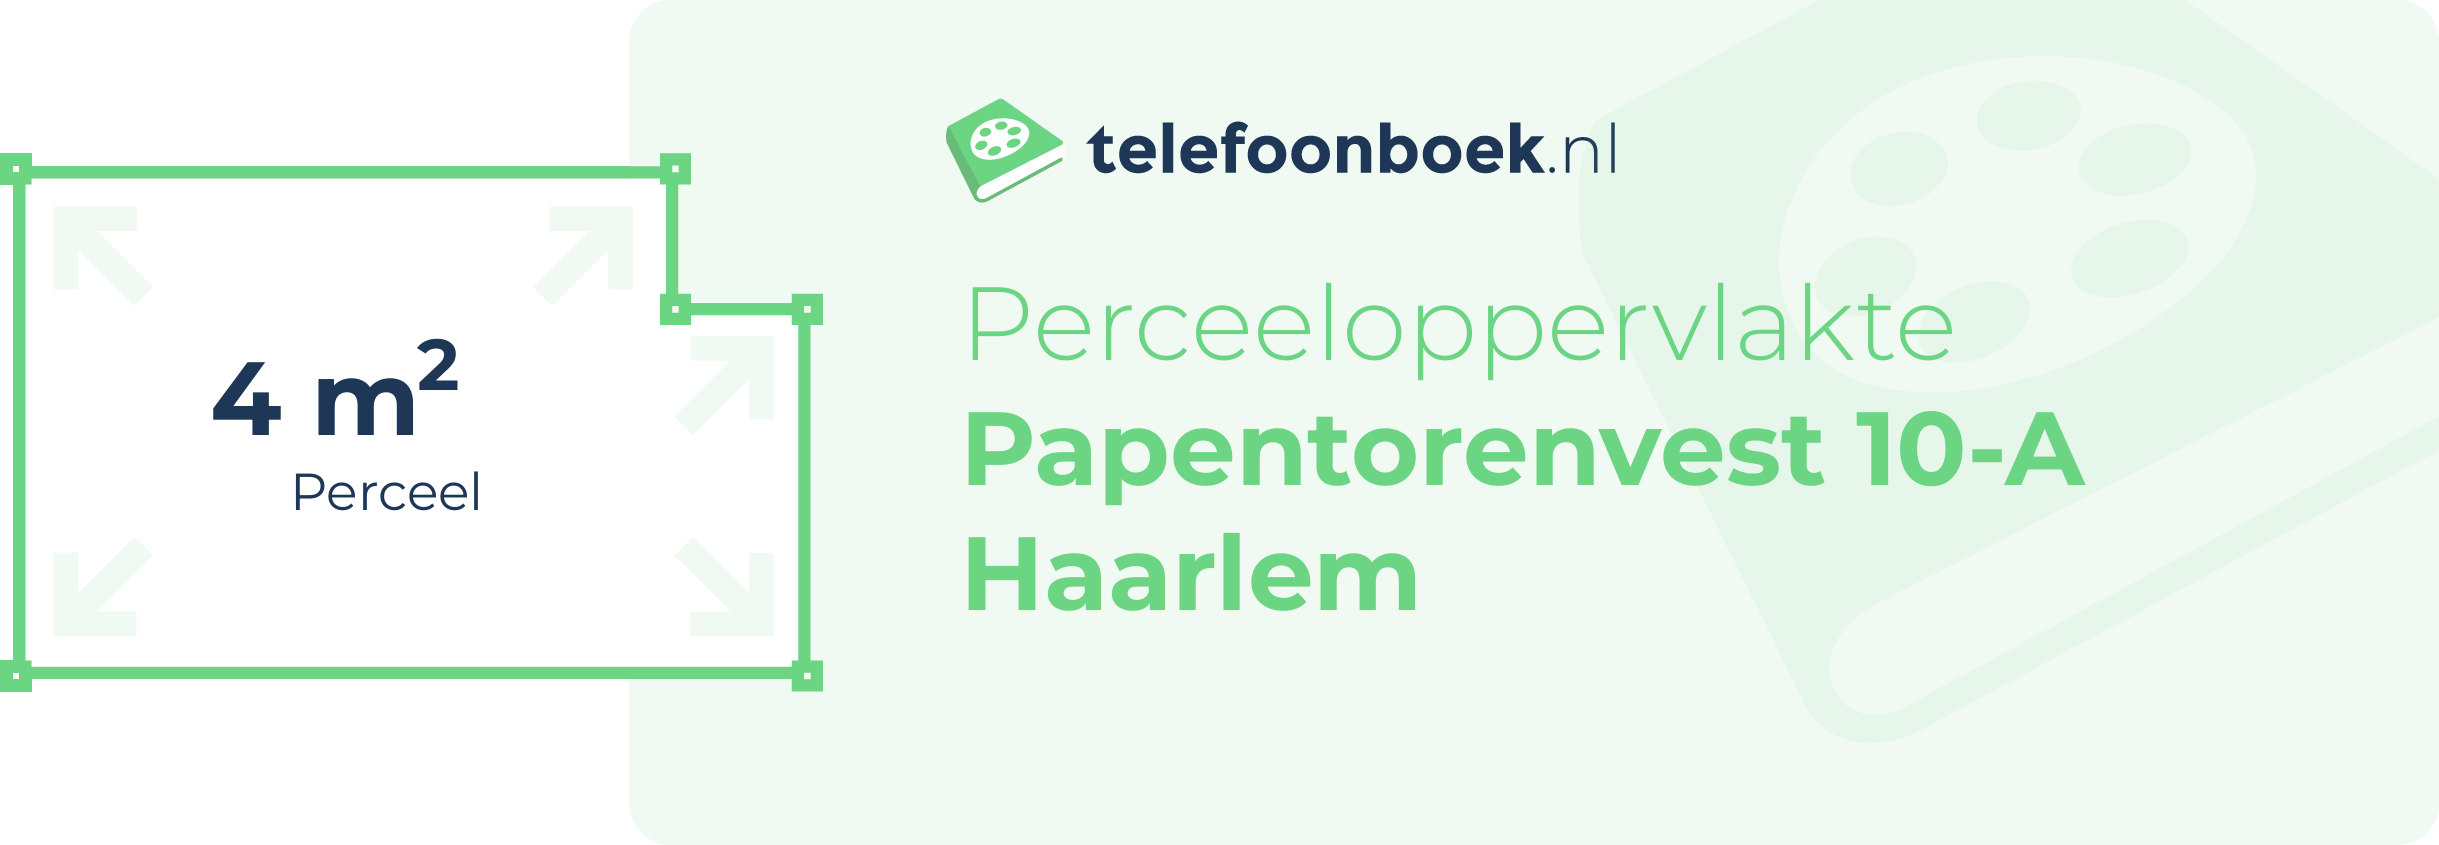 Perceeloppervlakte Papentorenvest 10-A Haarlem